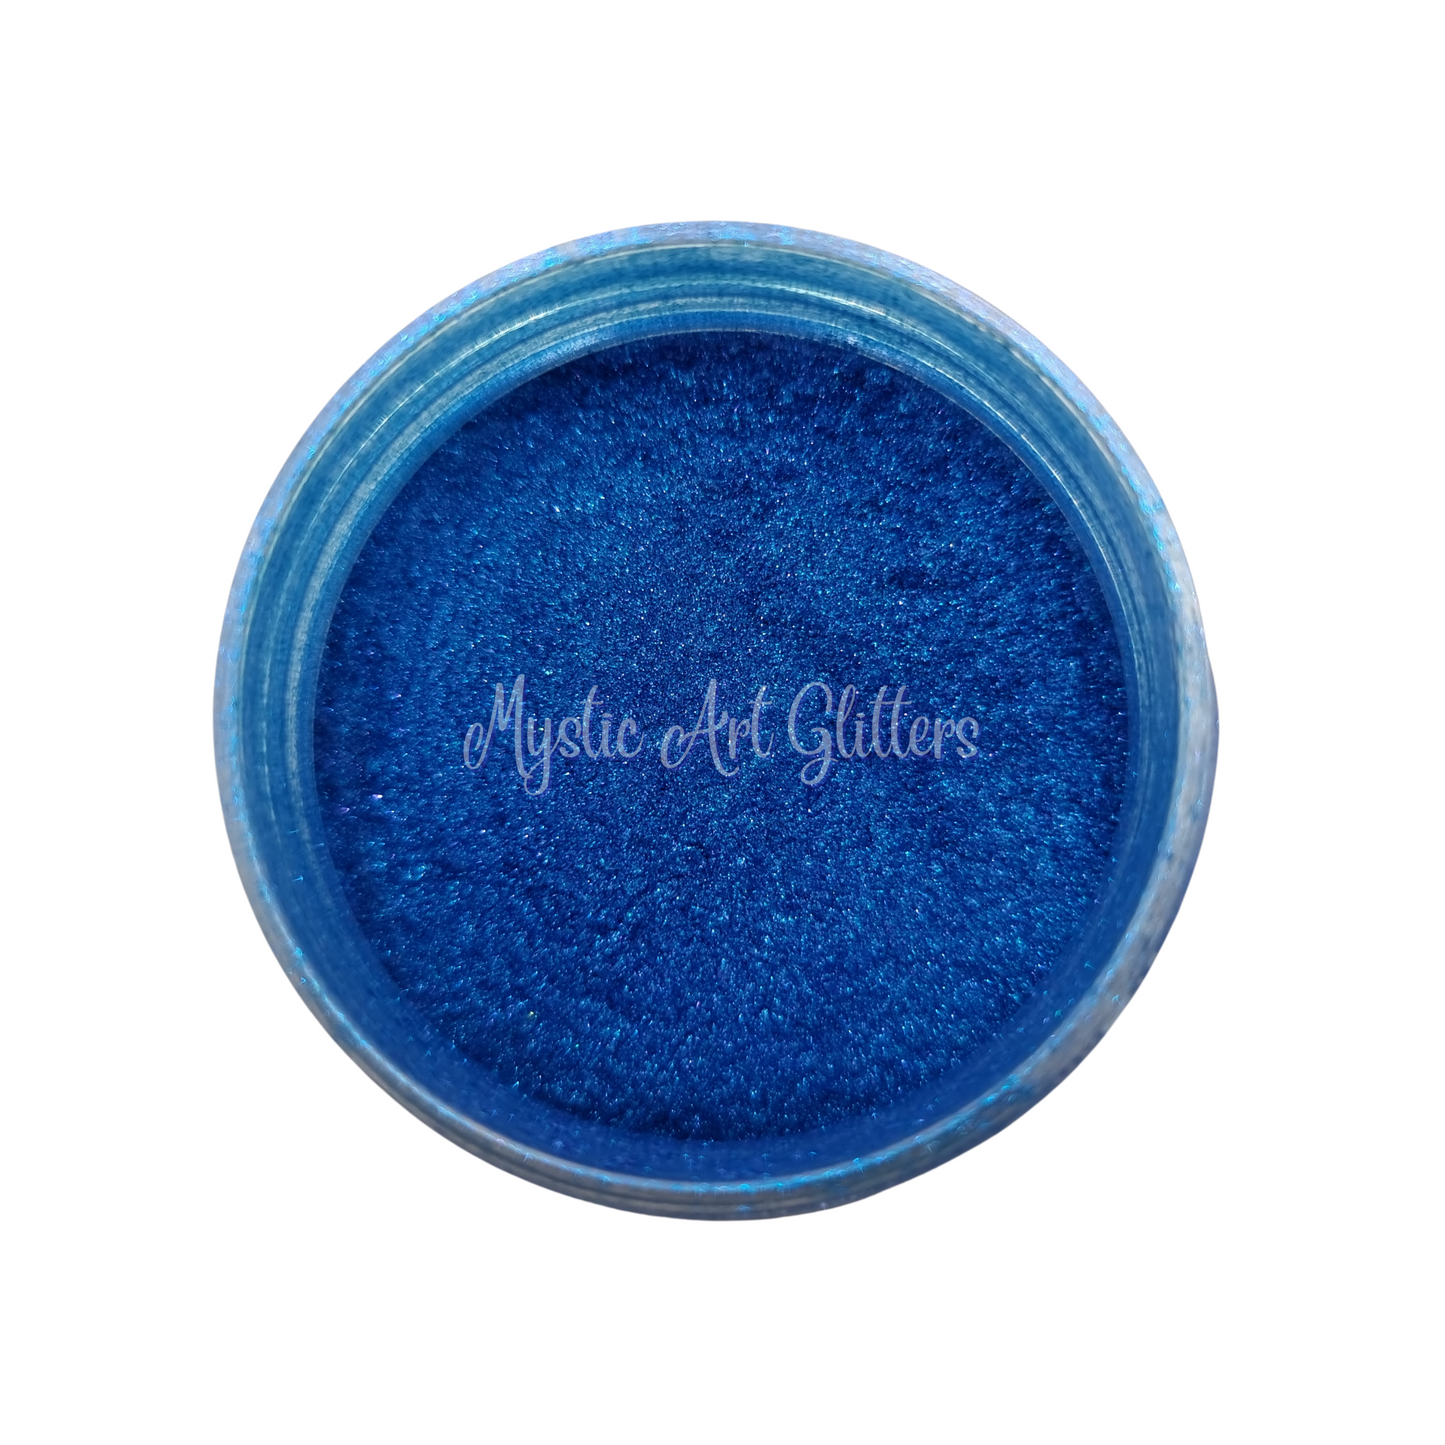 Chameleon Mica Powder - Sparkly Blue to Purple Shift 14gm - Mystic Art Glitters